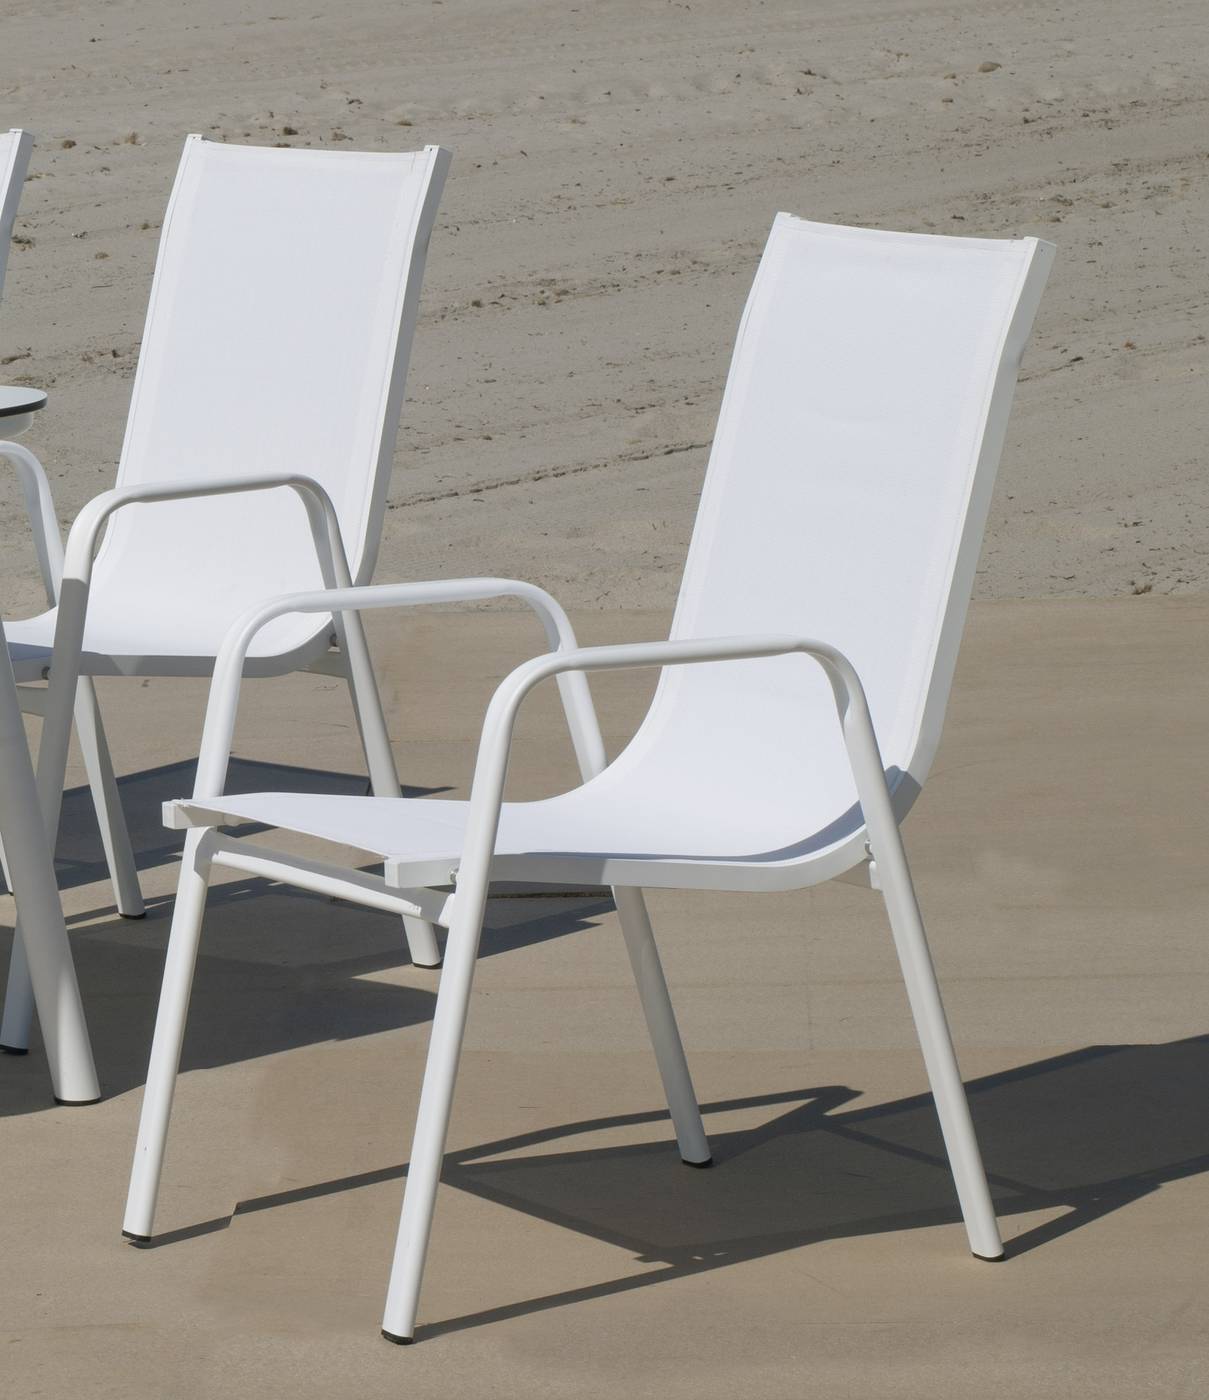 Set Mundra-150-4 Avalon - Conjunto aluminio para jardín: Mesa rectangular con tablero HPL de 150 cm + 4 sillones de textilen. Colores: blanco y antracita.